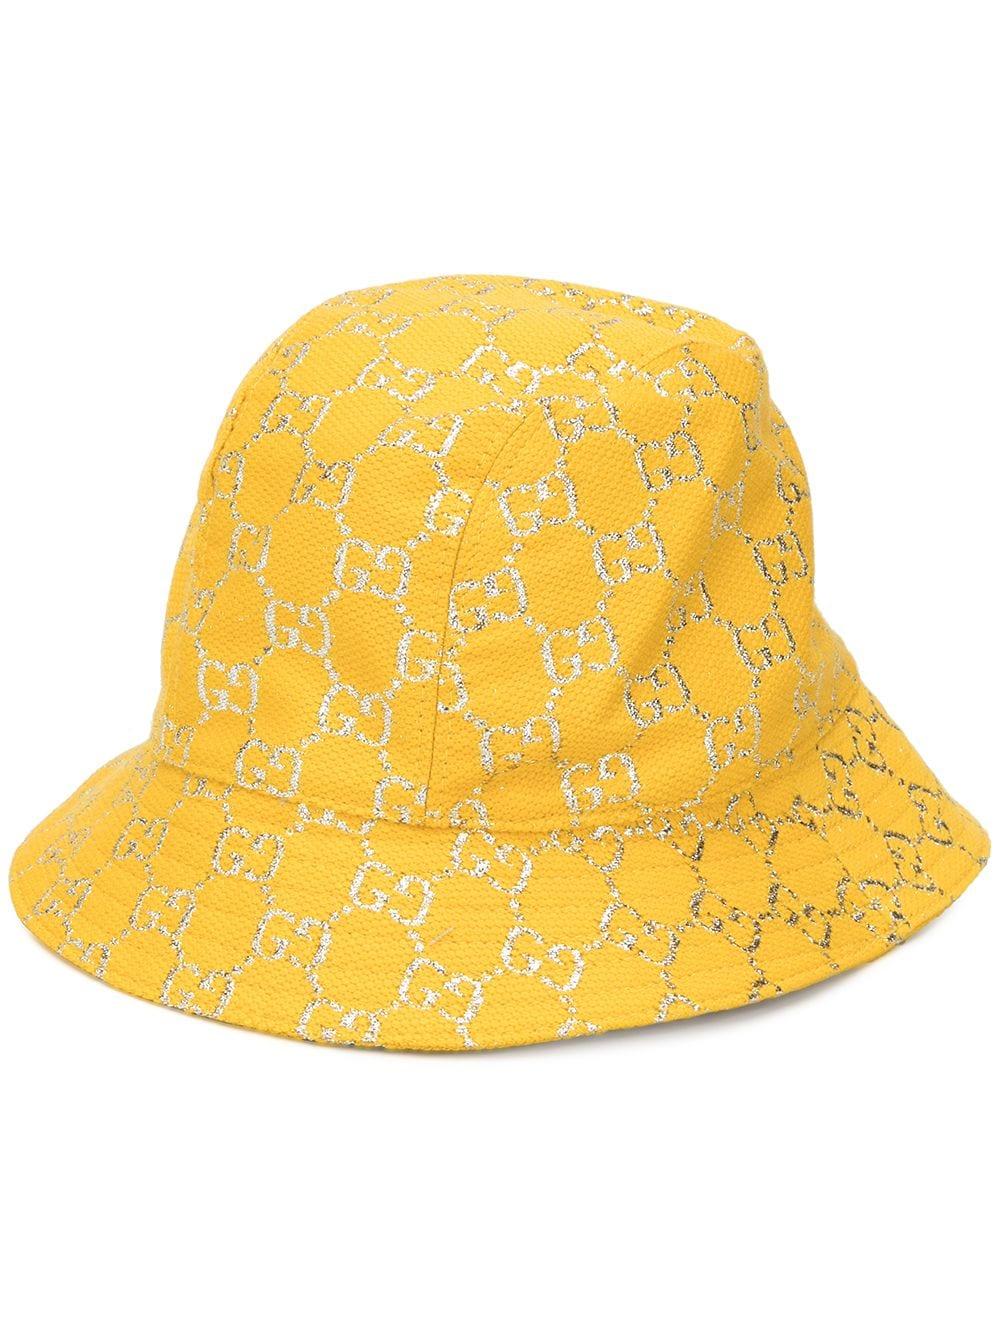 Gucci GG Supreme Canvas Bucket Hat - Farfetch